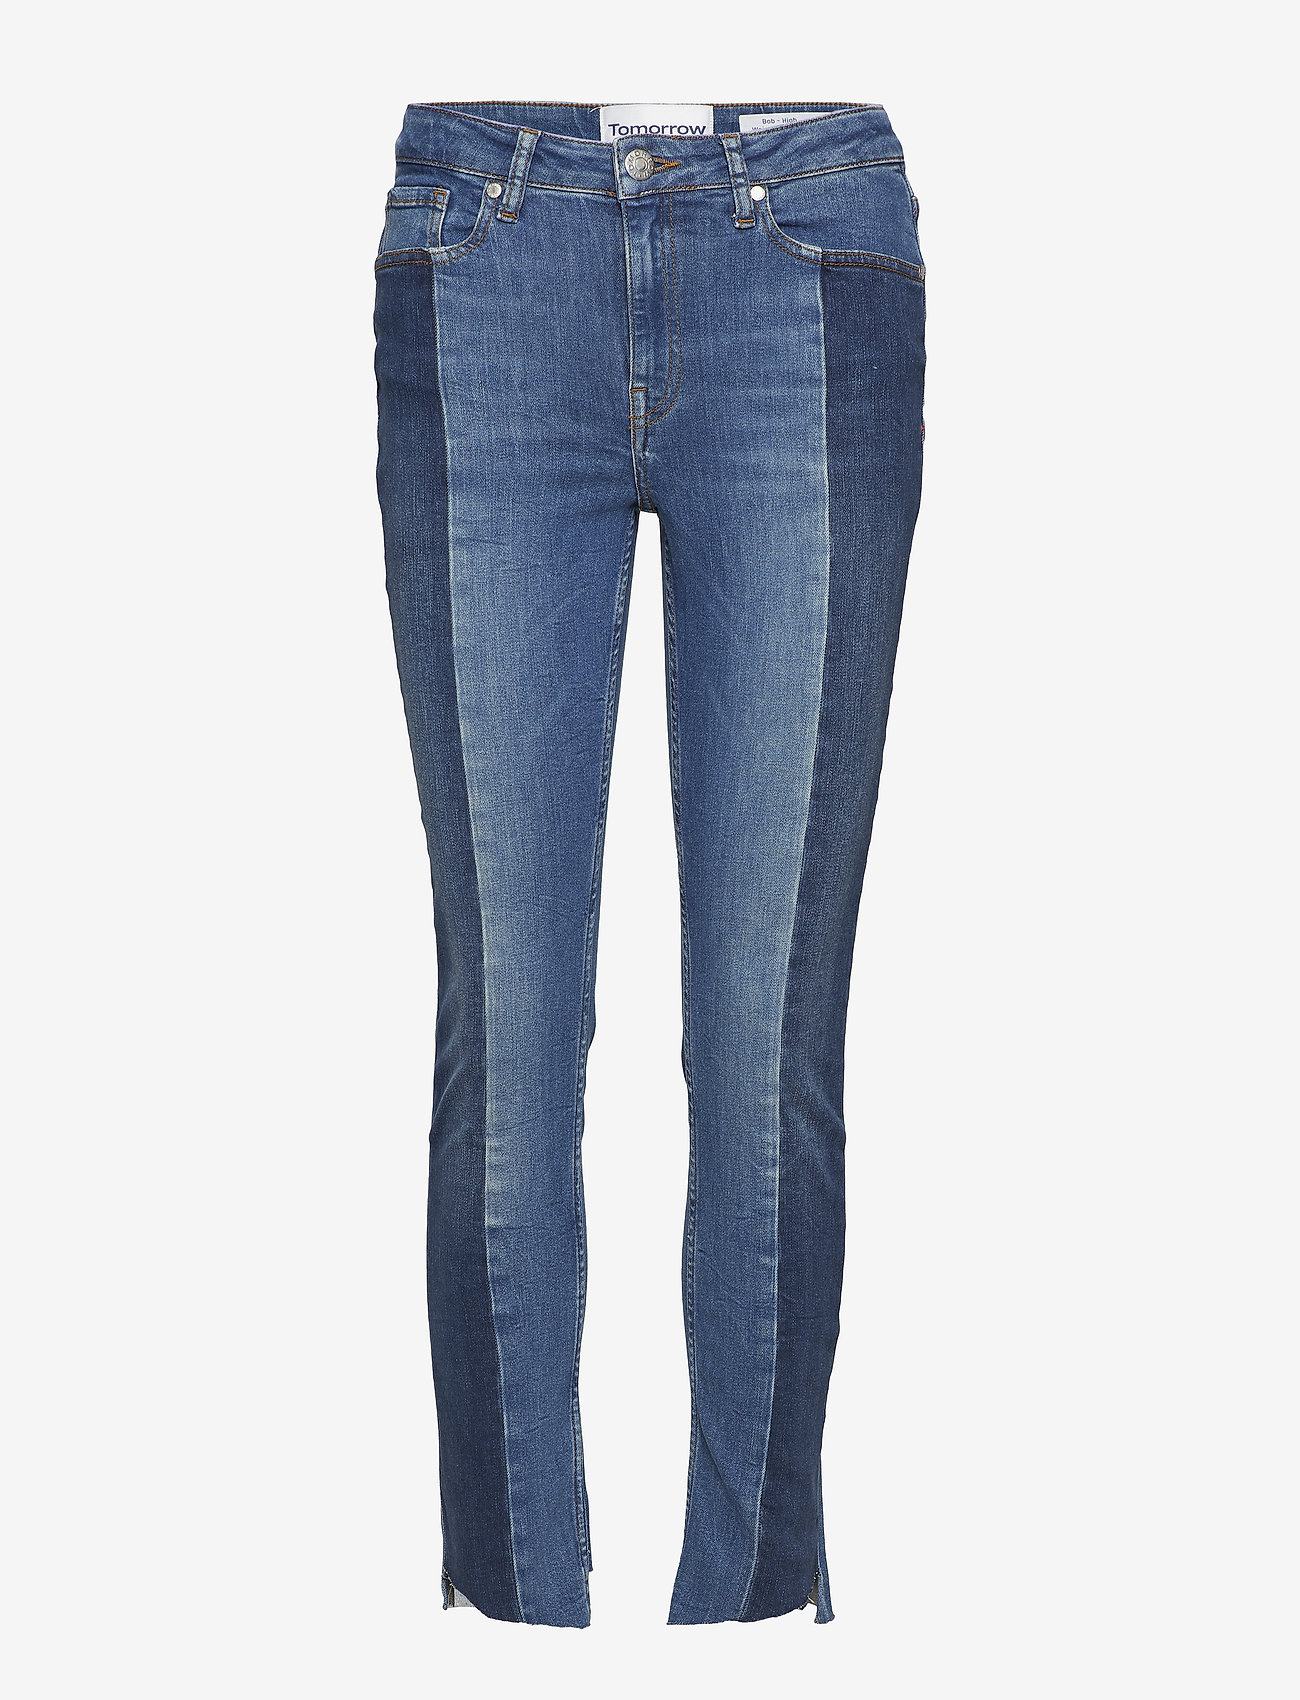 Tomorrow - Bob cropped jeans wash Brighton - skinny jeans - 51 denim blue - 0